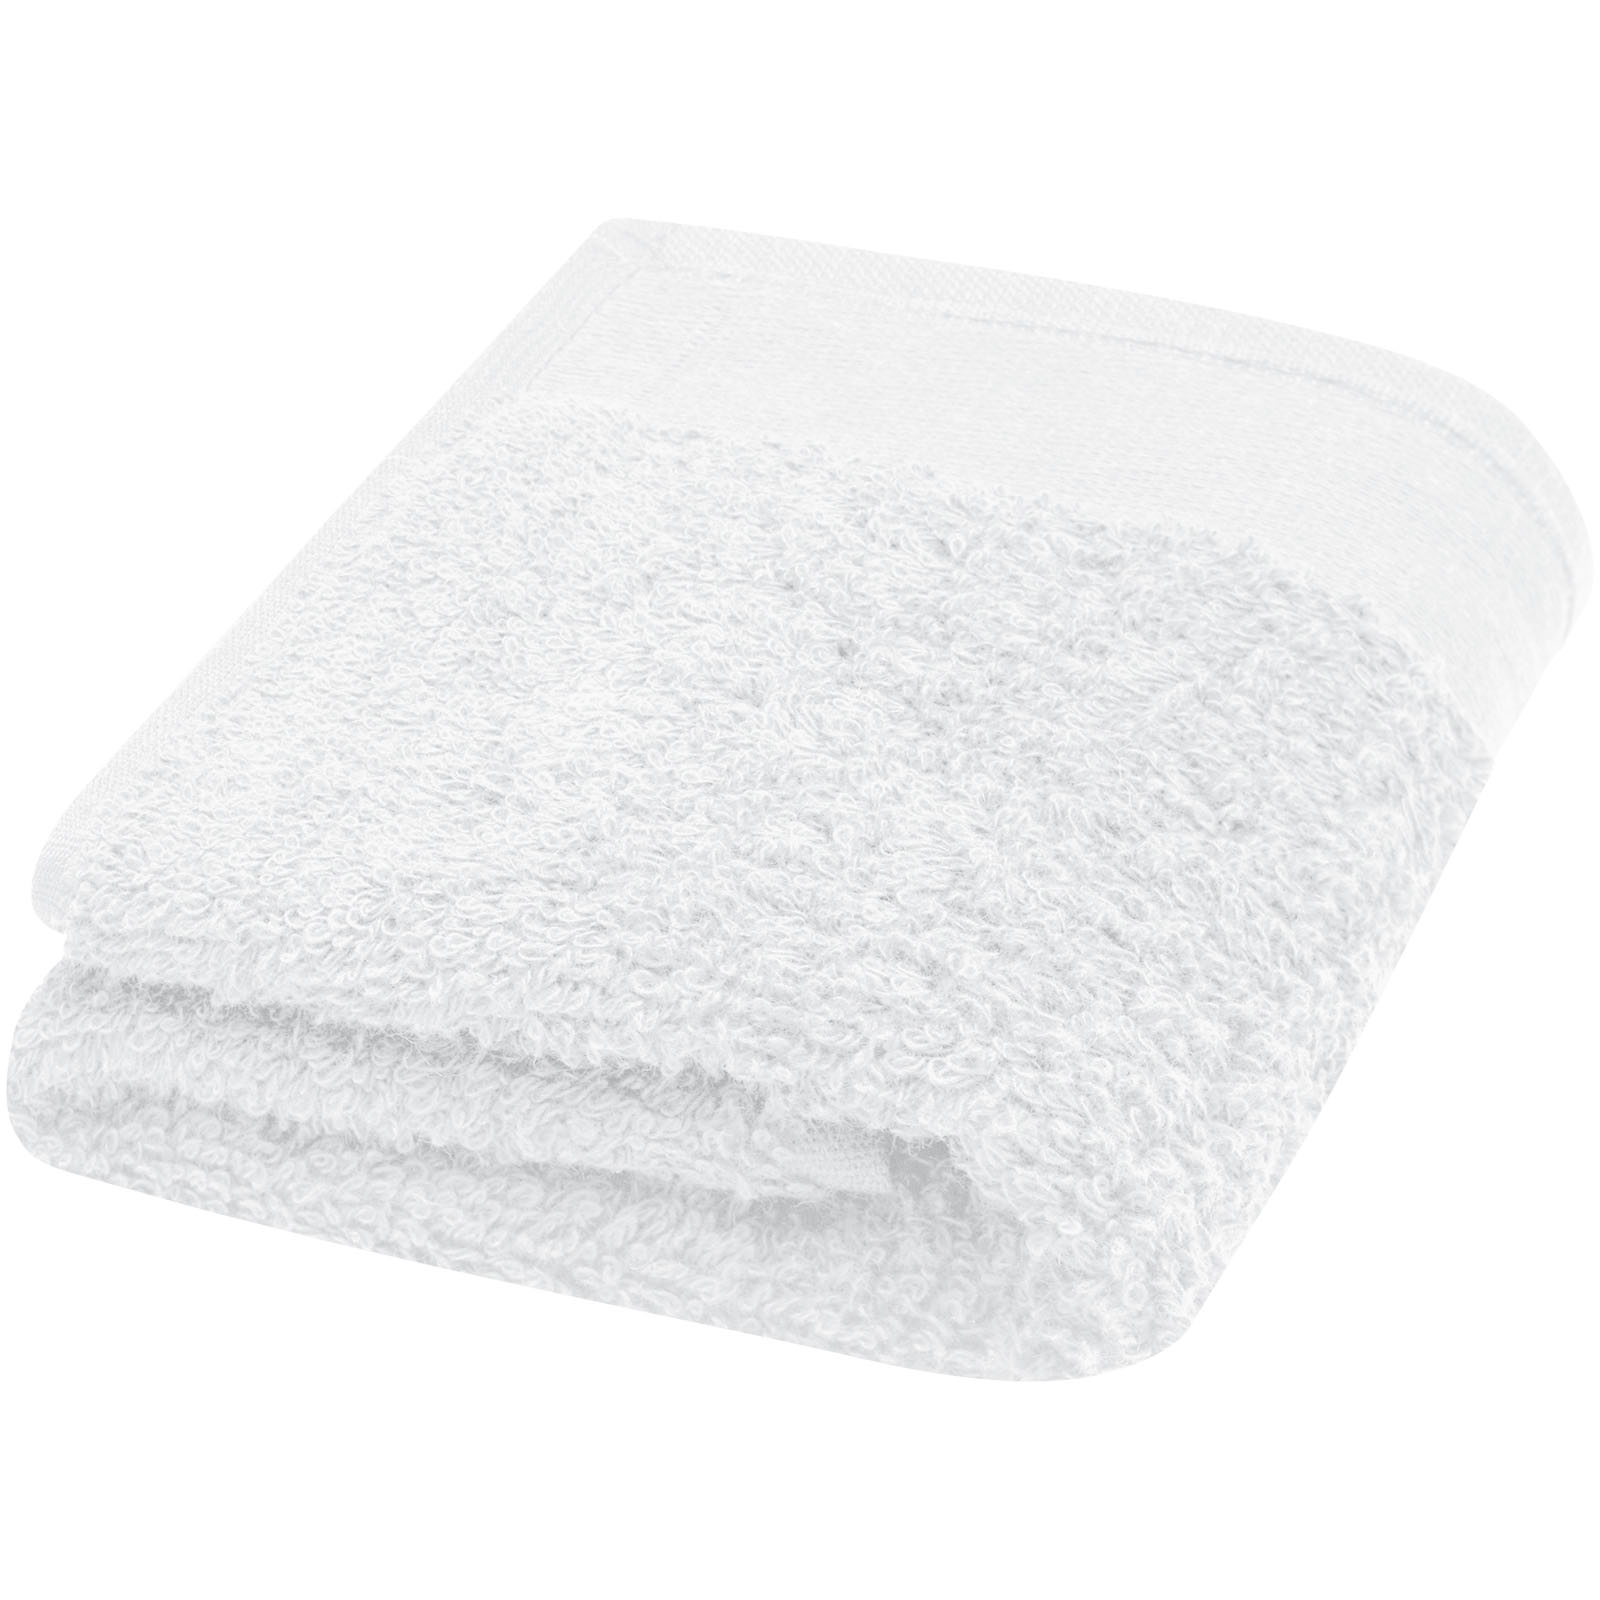 Health & Personal Care - Chloe 550 g/m² cotton towel 30x50 cm